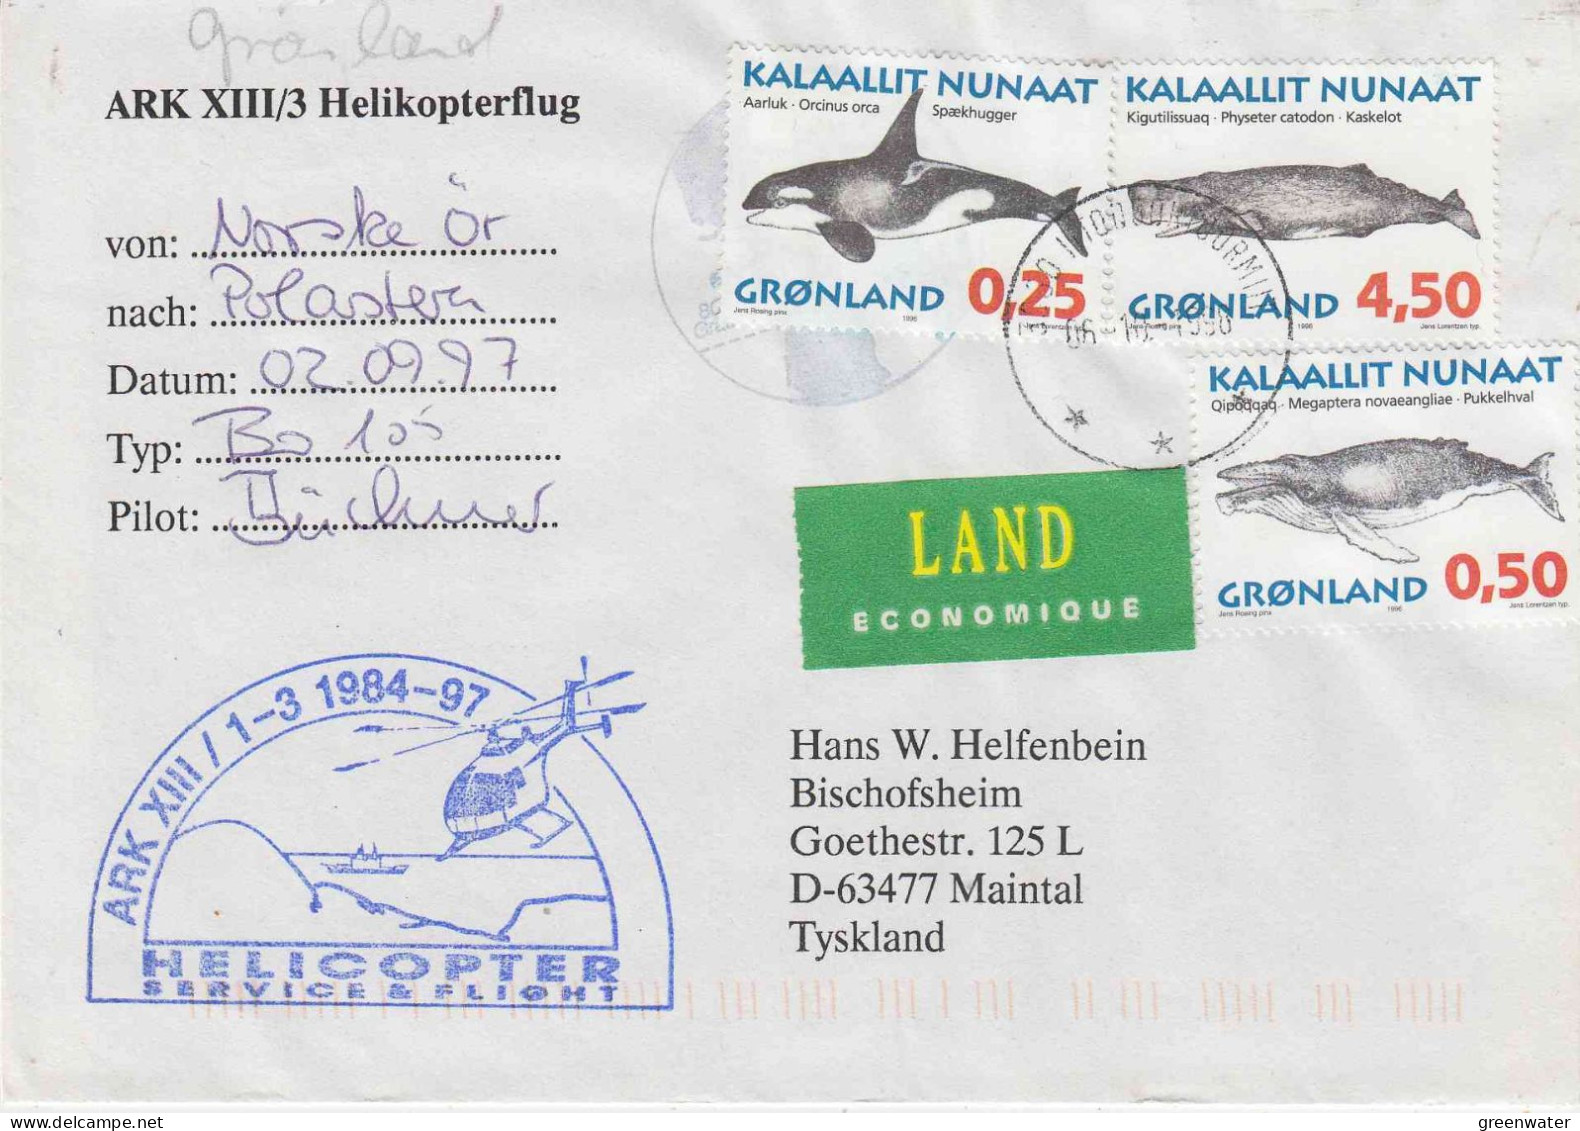 Greenland Heli Flight Norske Or To Polarstern 02.09.1997 (JS151) - Poolvluchten